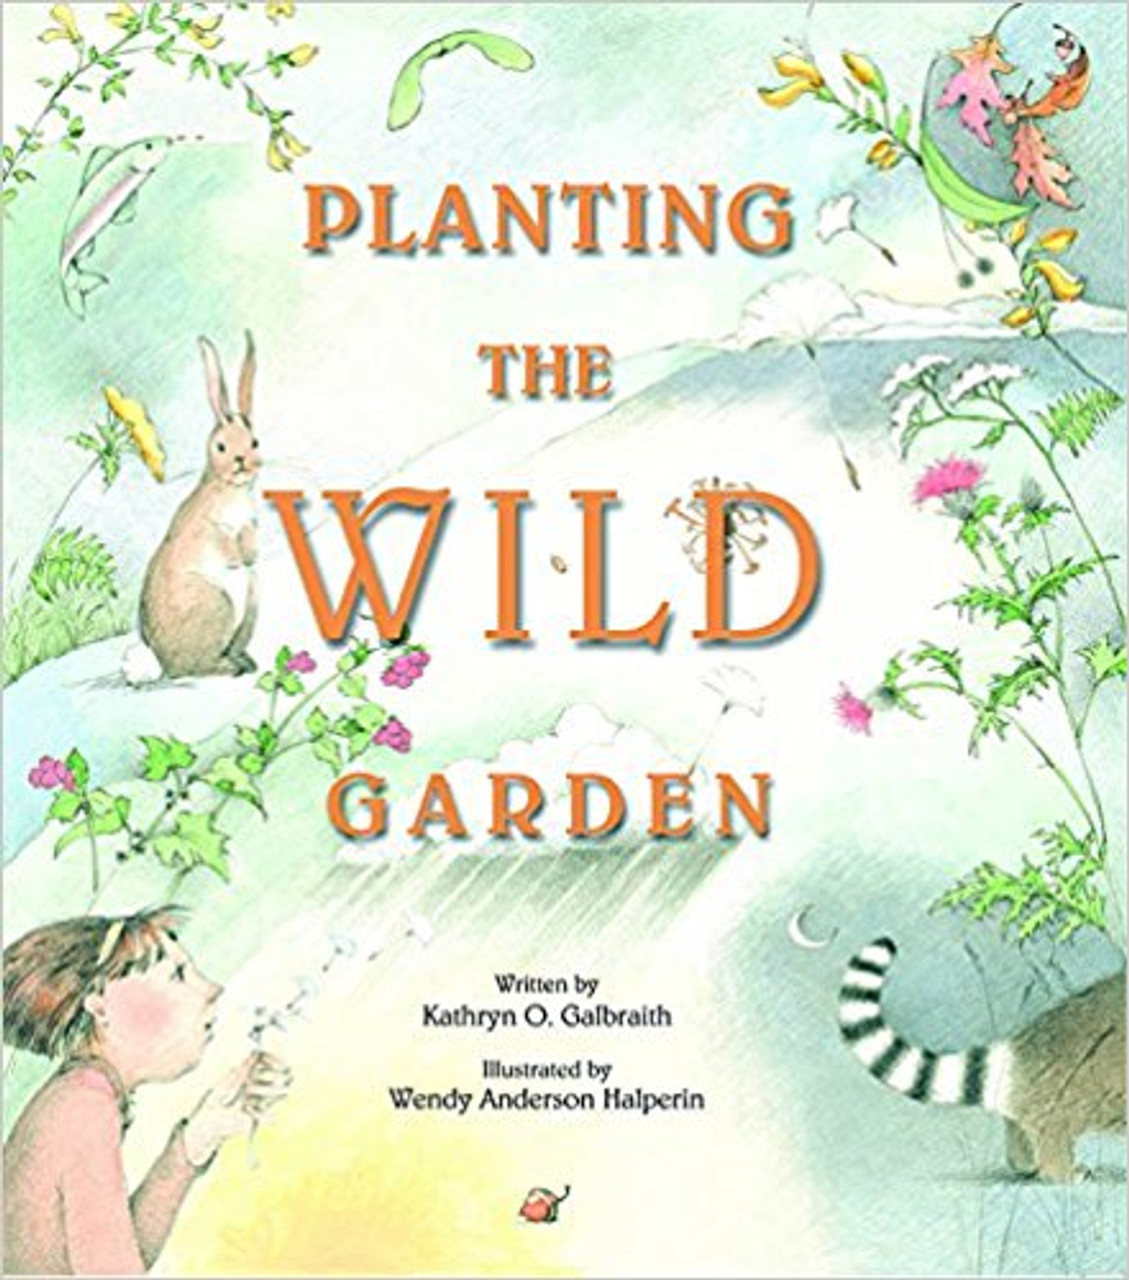 Planting the Wild Garden by Kathryn Osebold Galbraith